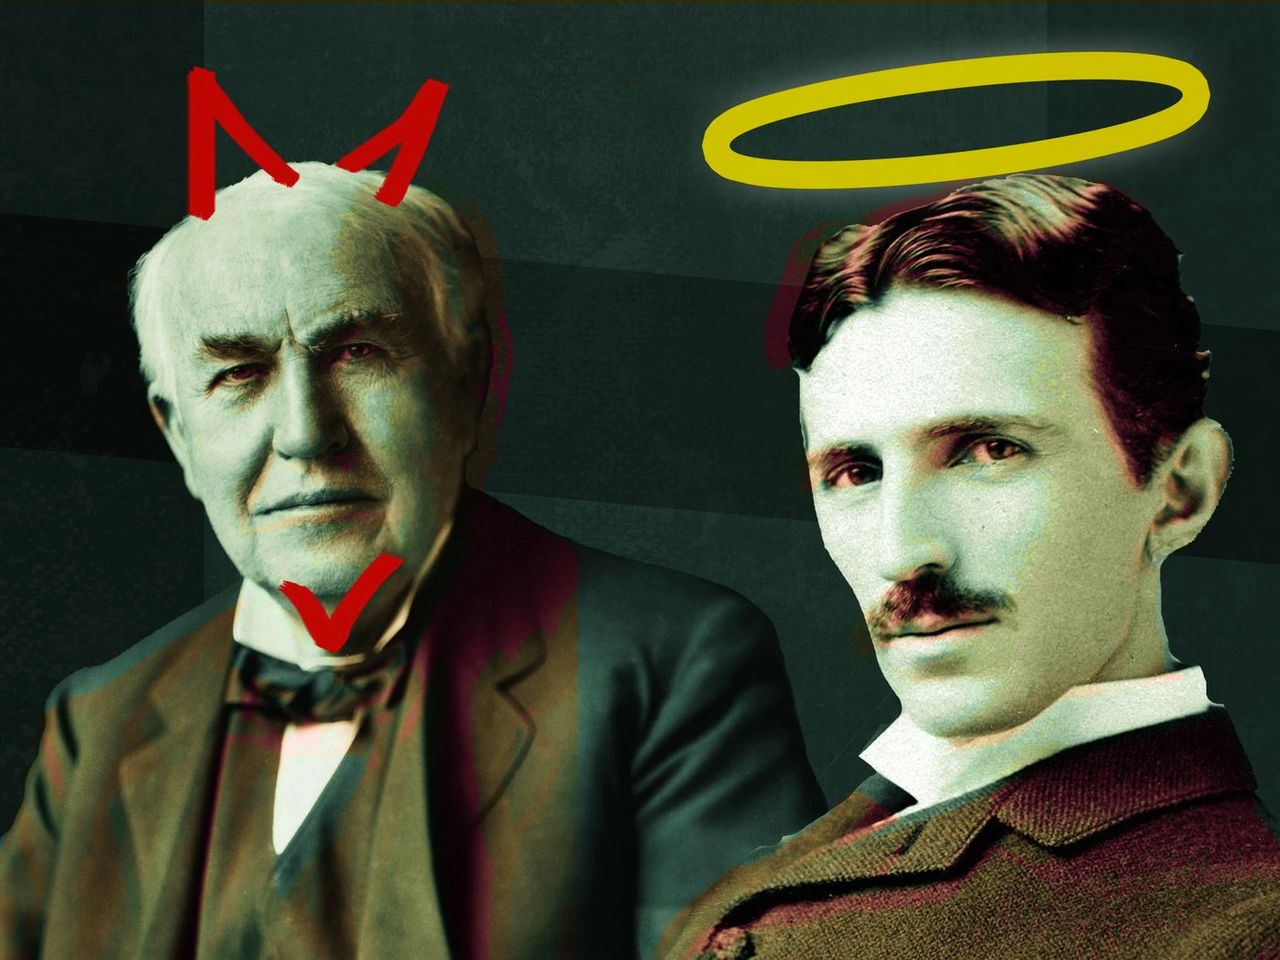 Between Edison's logic and Tesla's dream